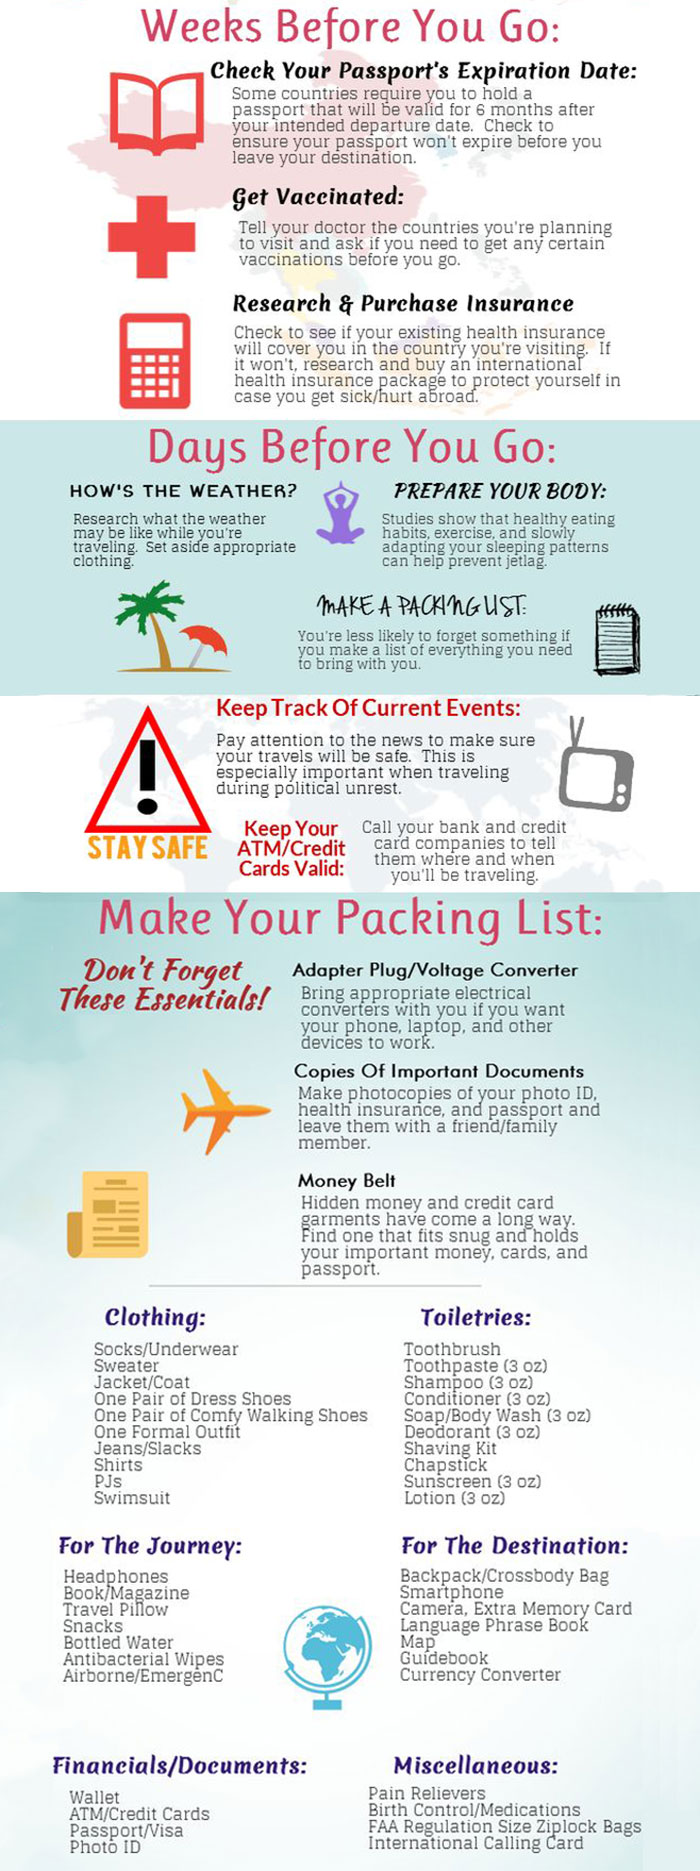 International Travel Checklist